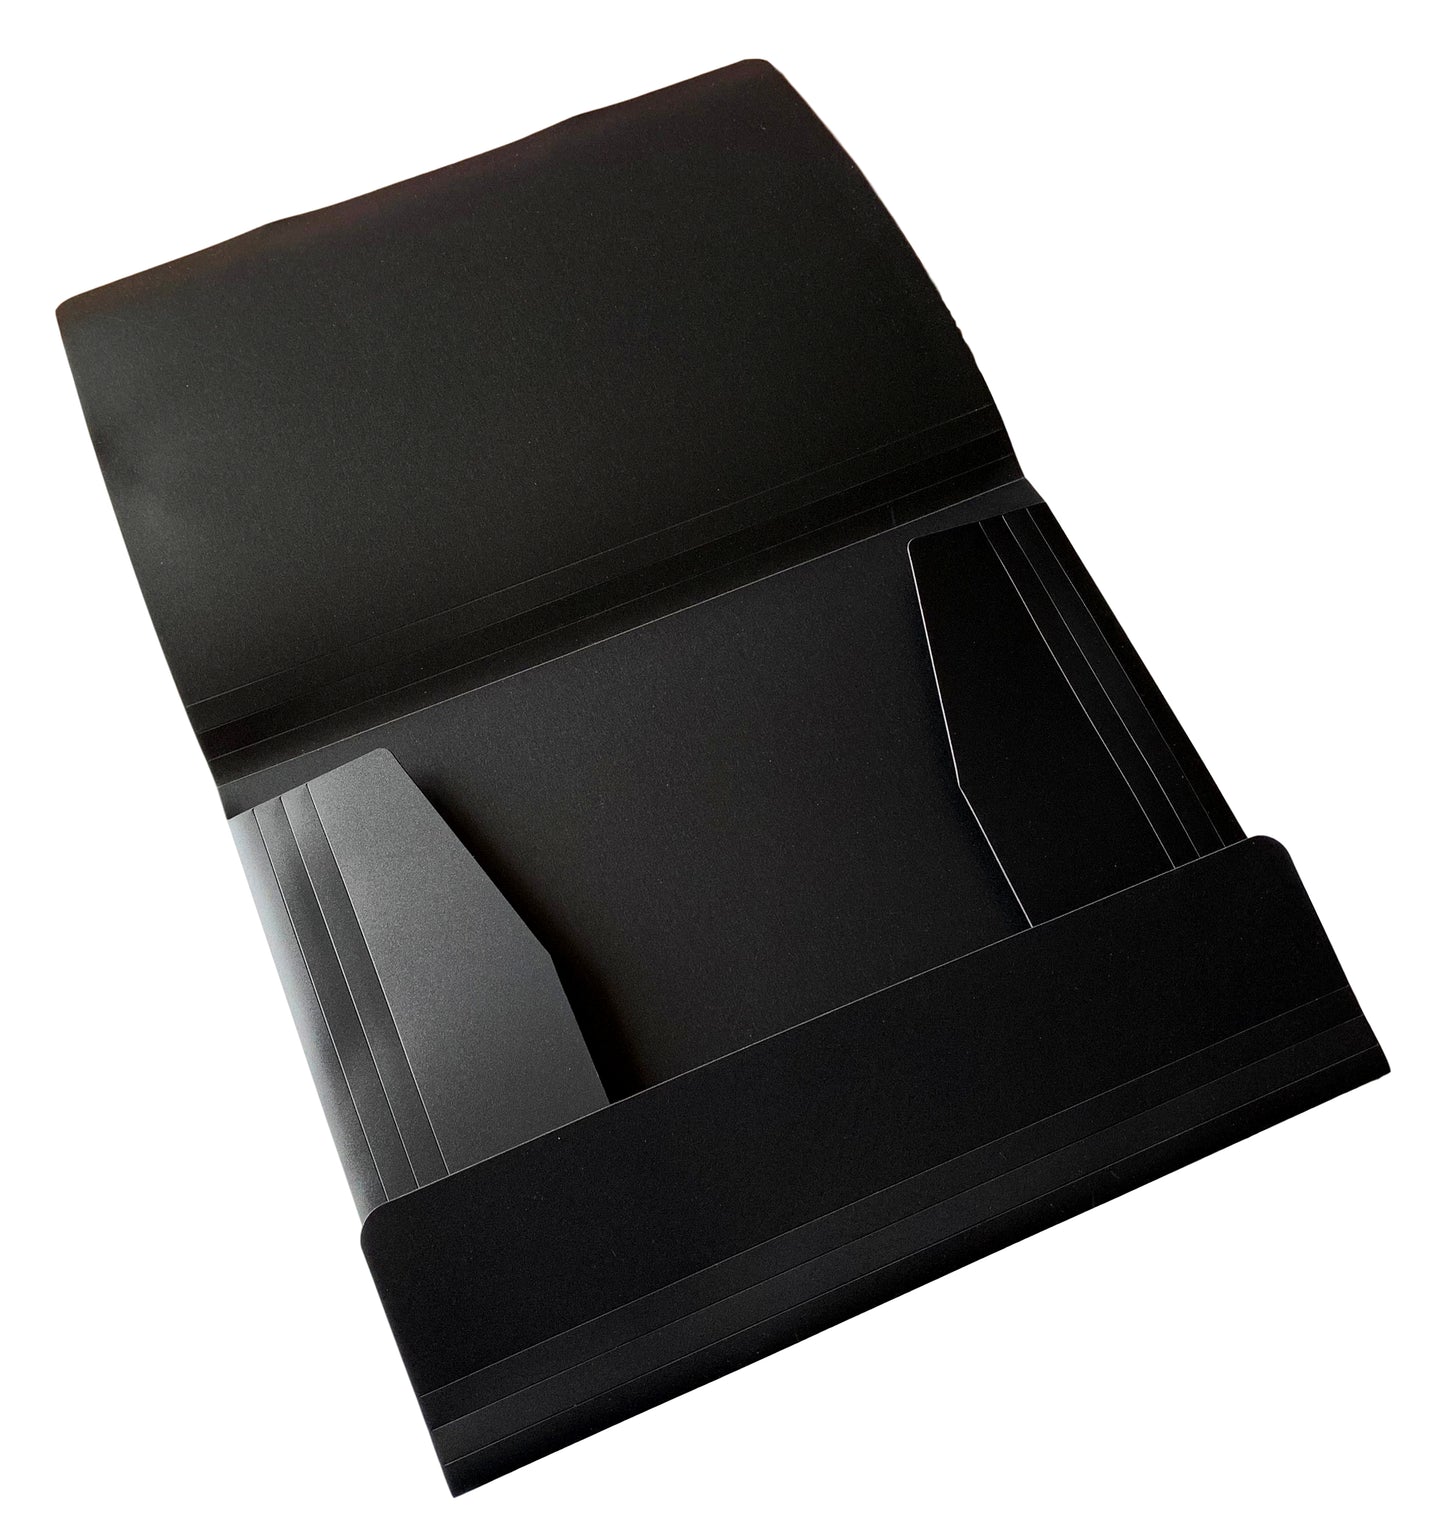 Janrax A4 Black 3 Flap Folder with Elasticated Closure